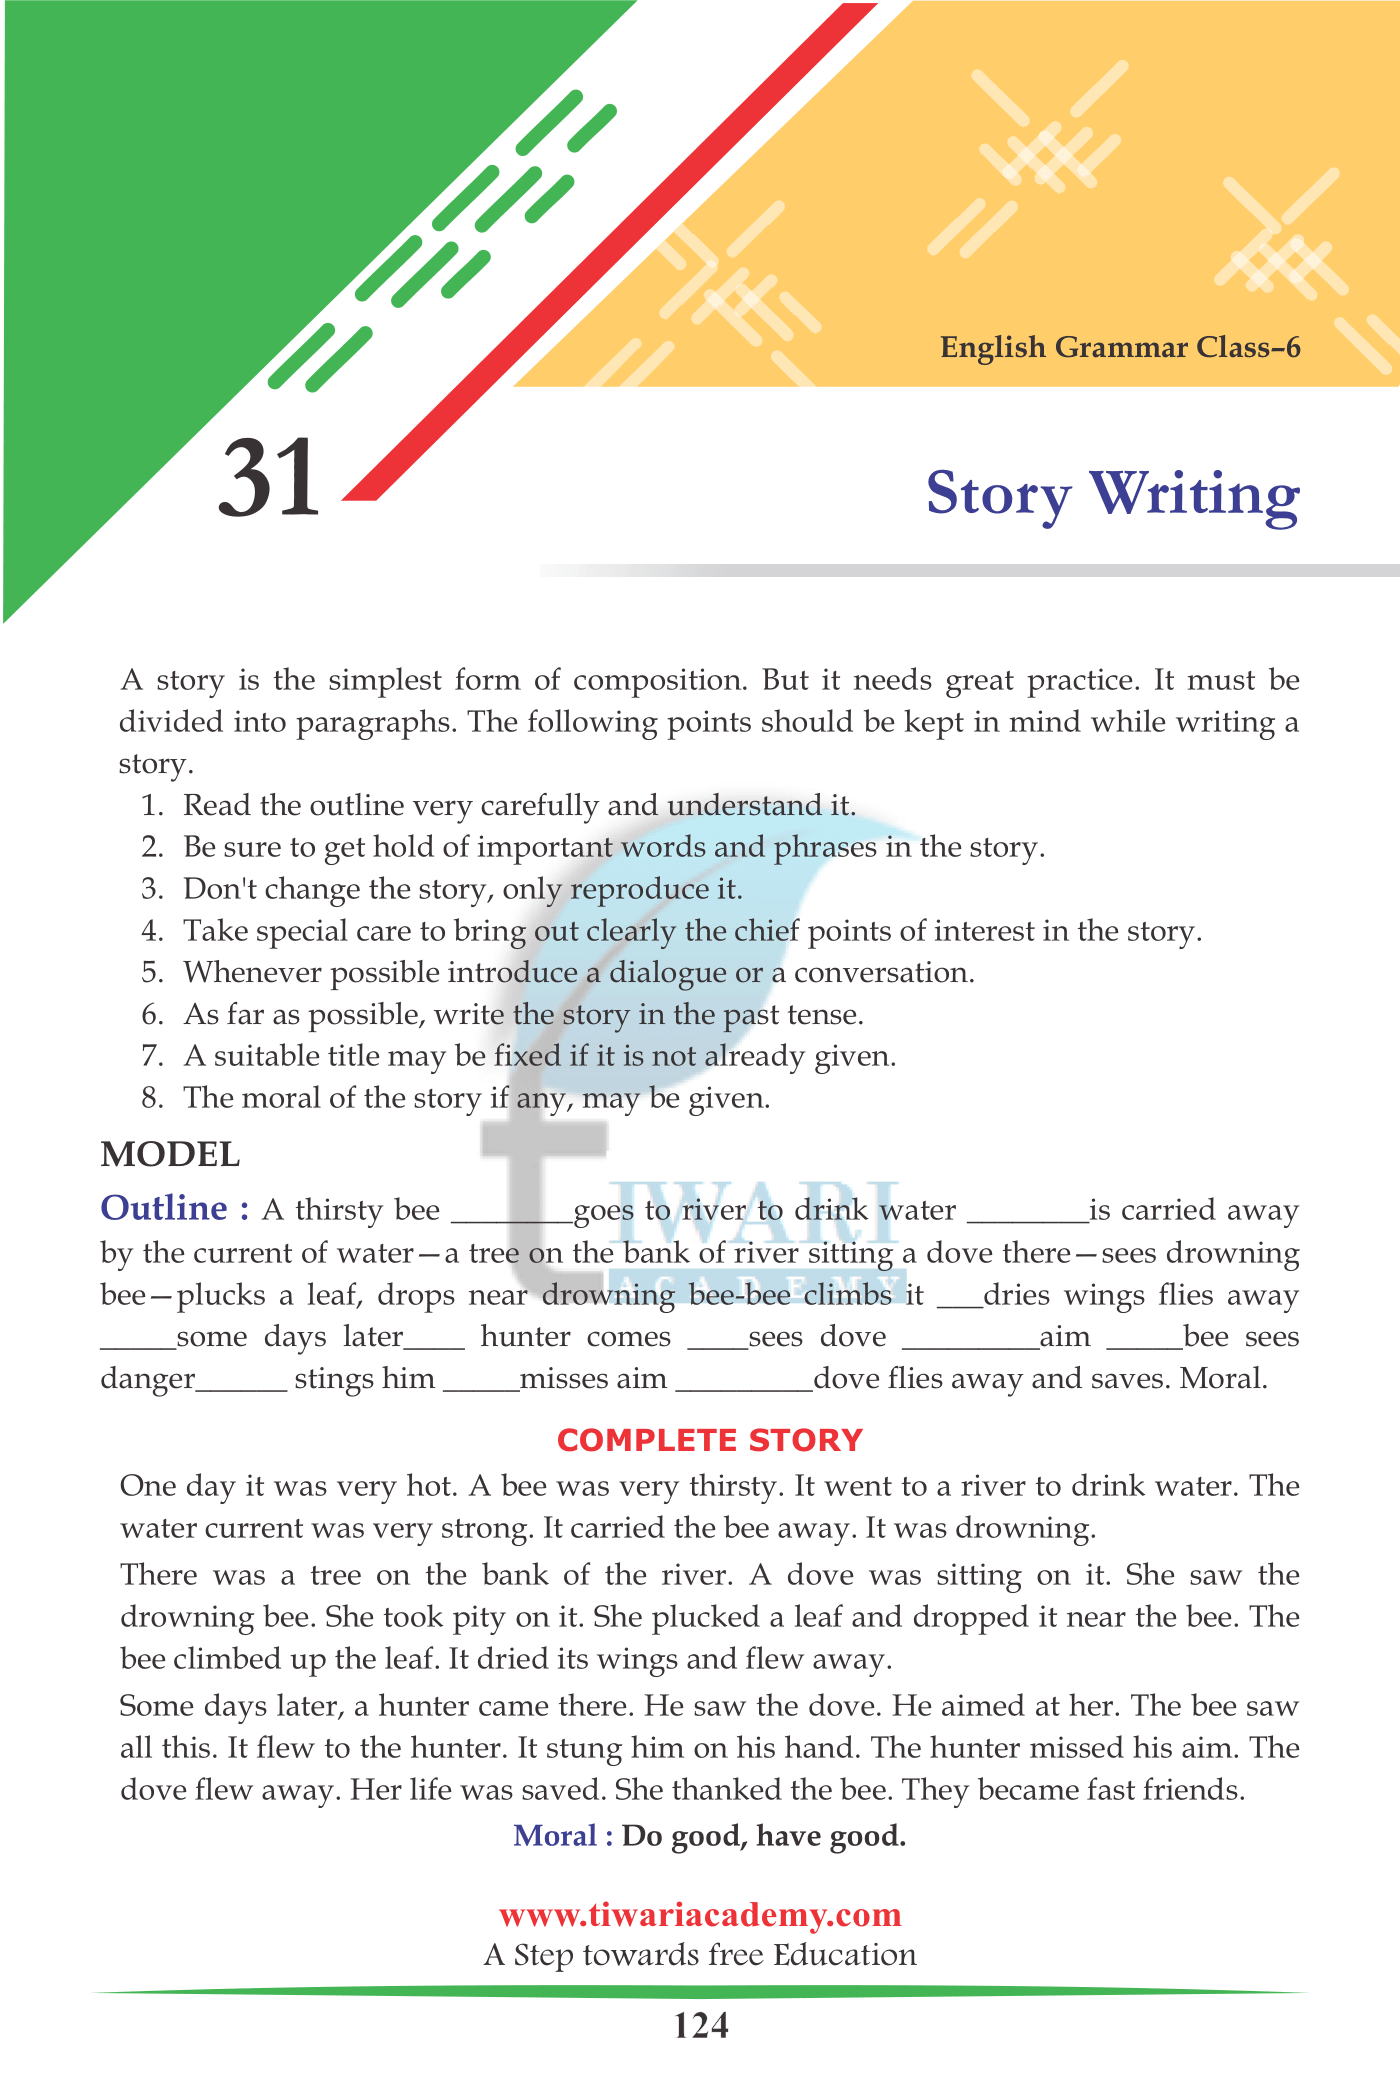 Class 6 English Grammar Chapter 31 Story Writing skills